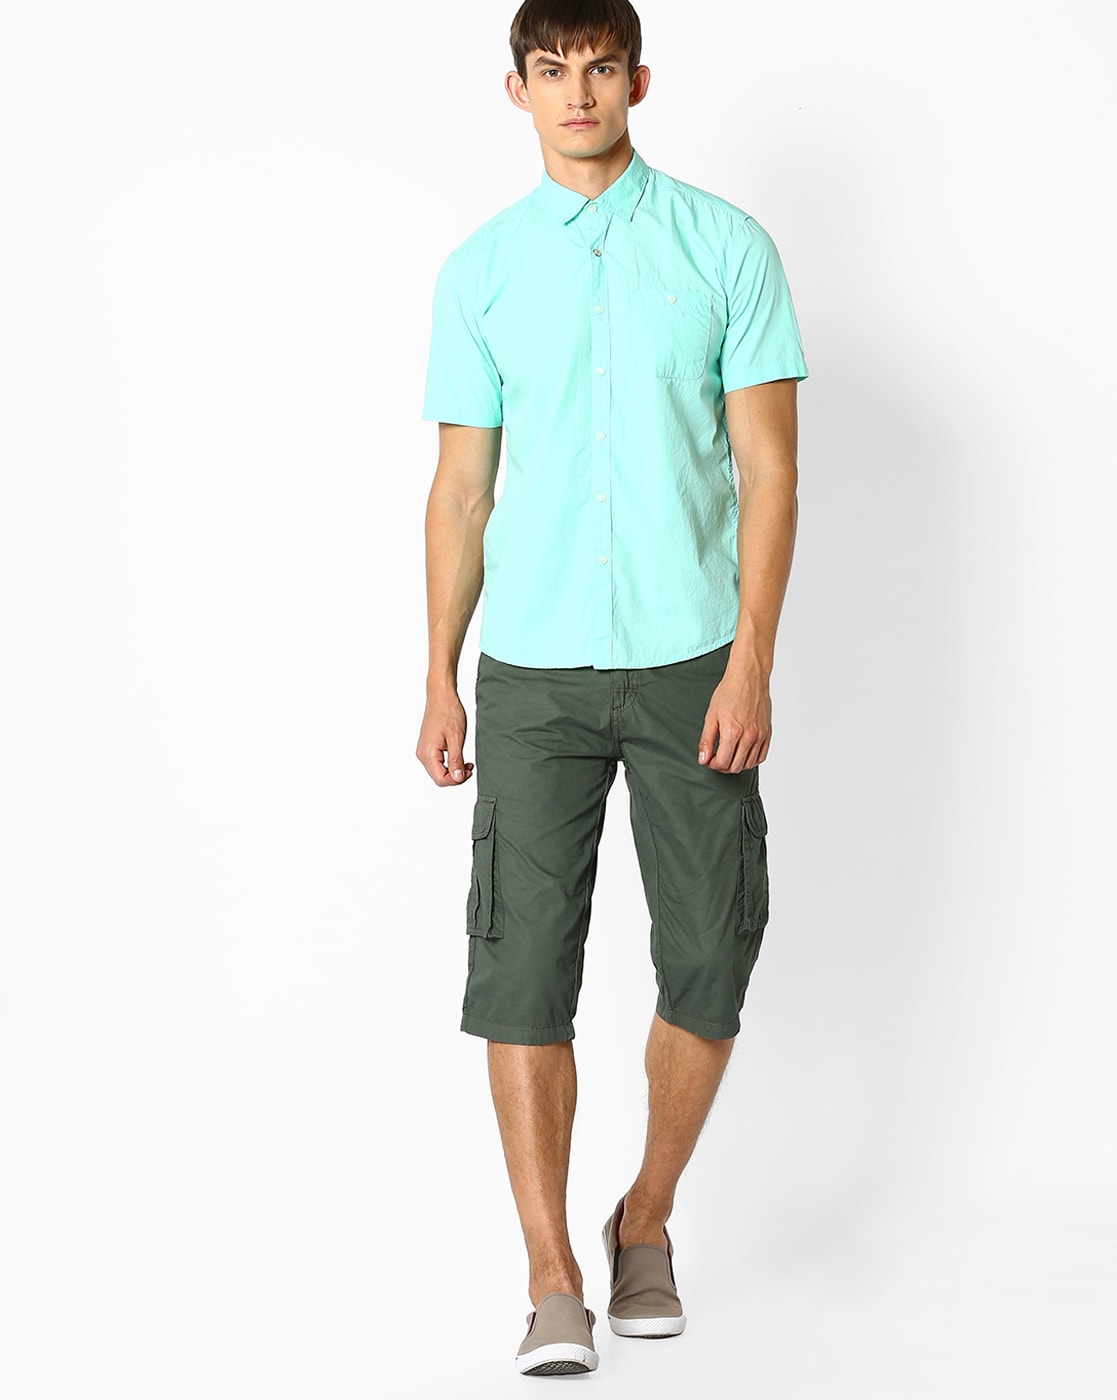 Mens Cotton Three Fourth Capri Shorts With Two Zippered Pockets